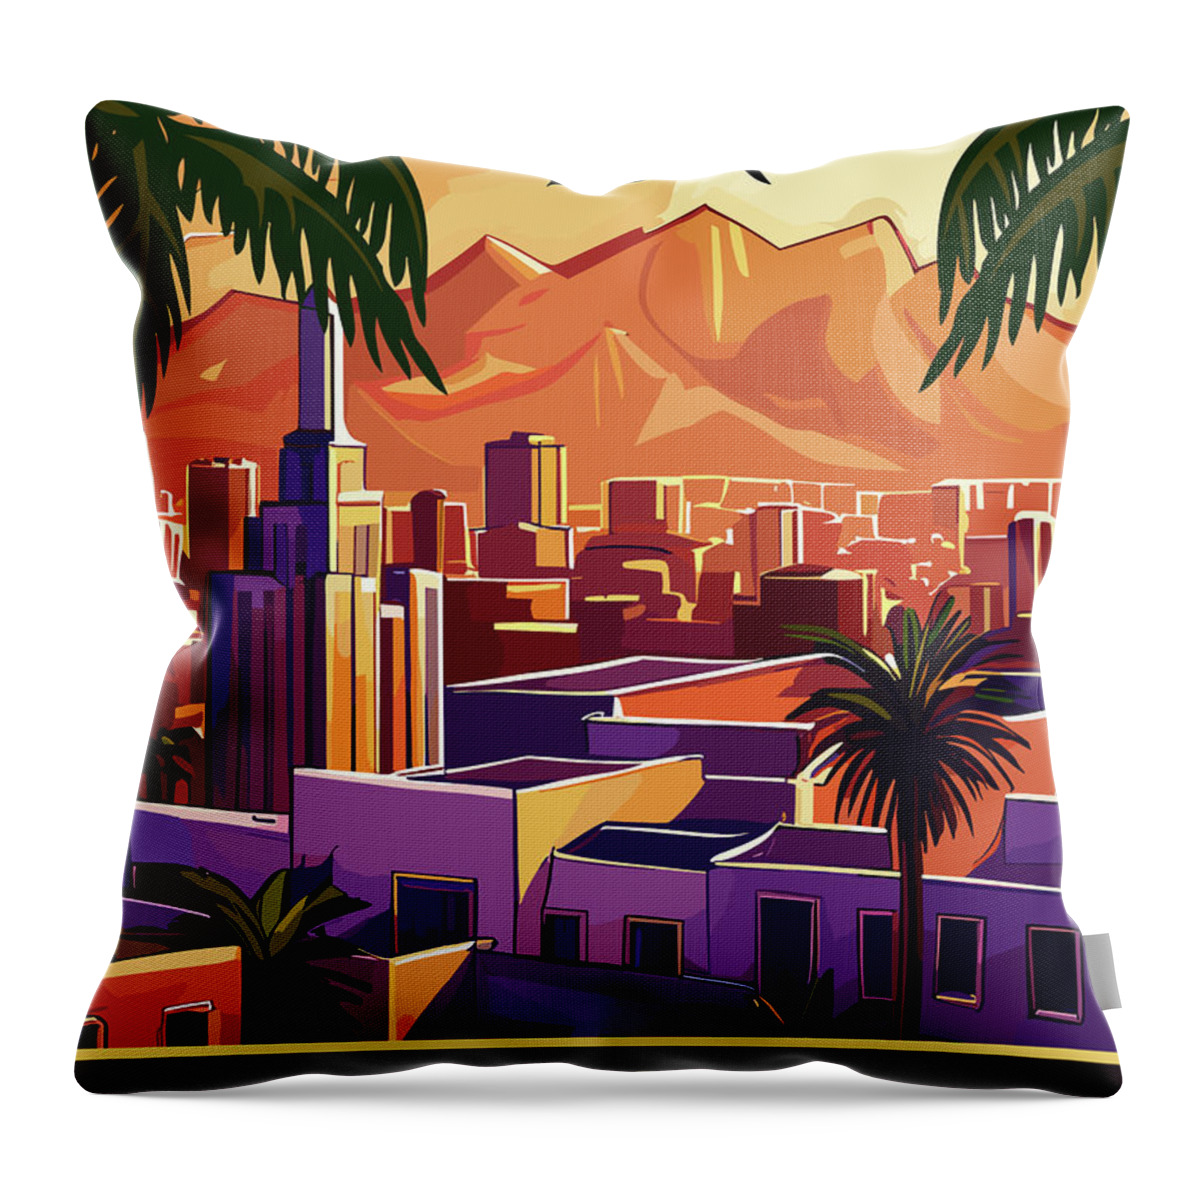 Tucson Throw Pillow featuring the digital art Tucson, Arizona by Long Shot